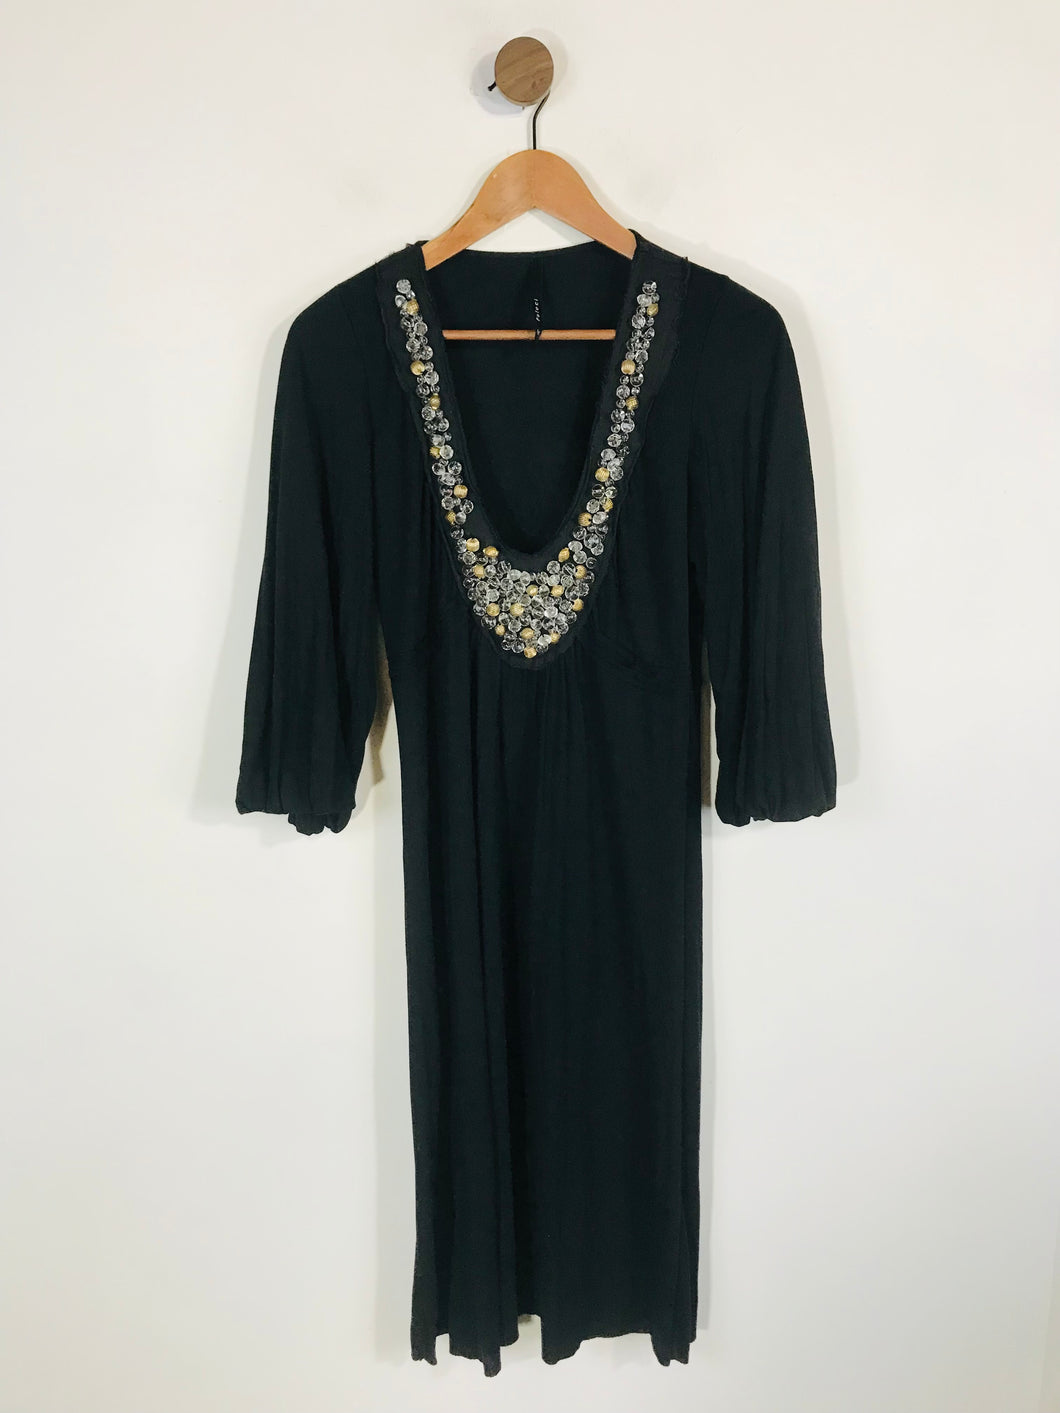 Poleci Women's Embellished A-Line Dress | M UK10-12 | Black